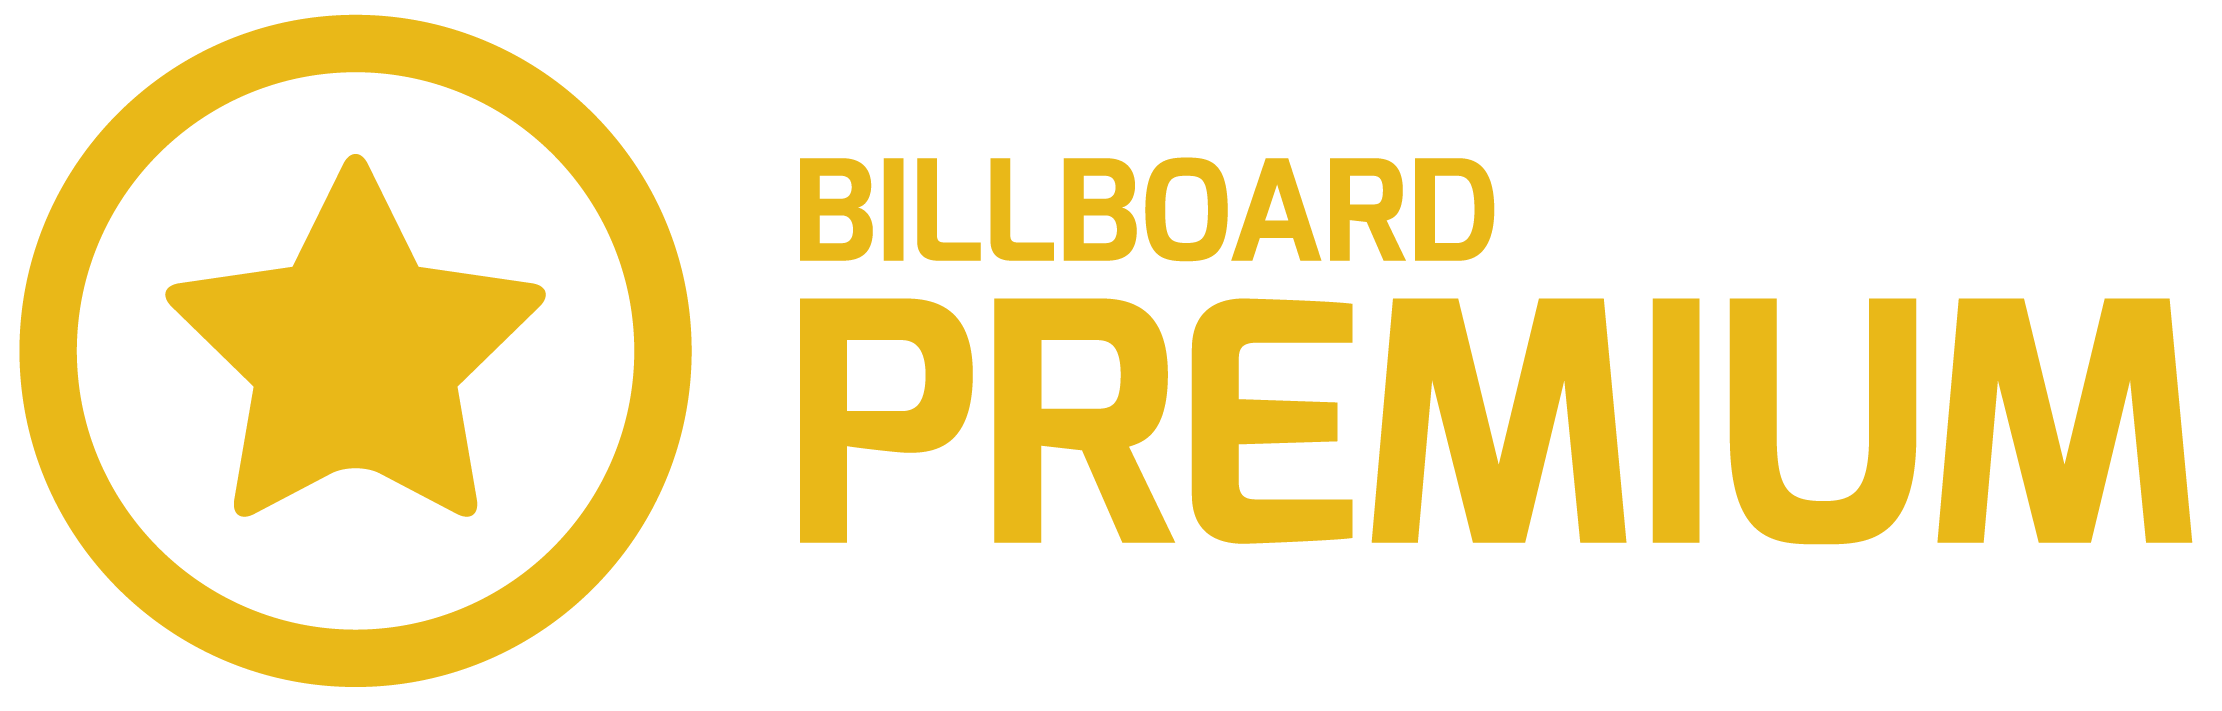 billboard klasy premium